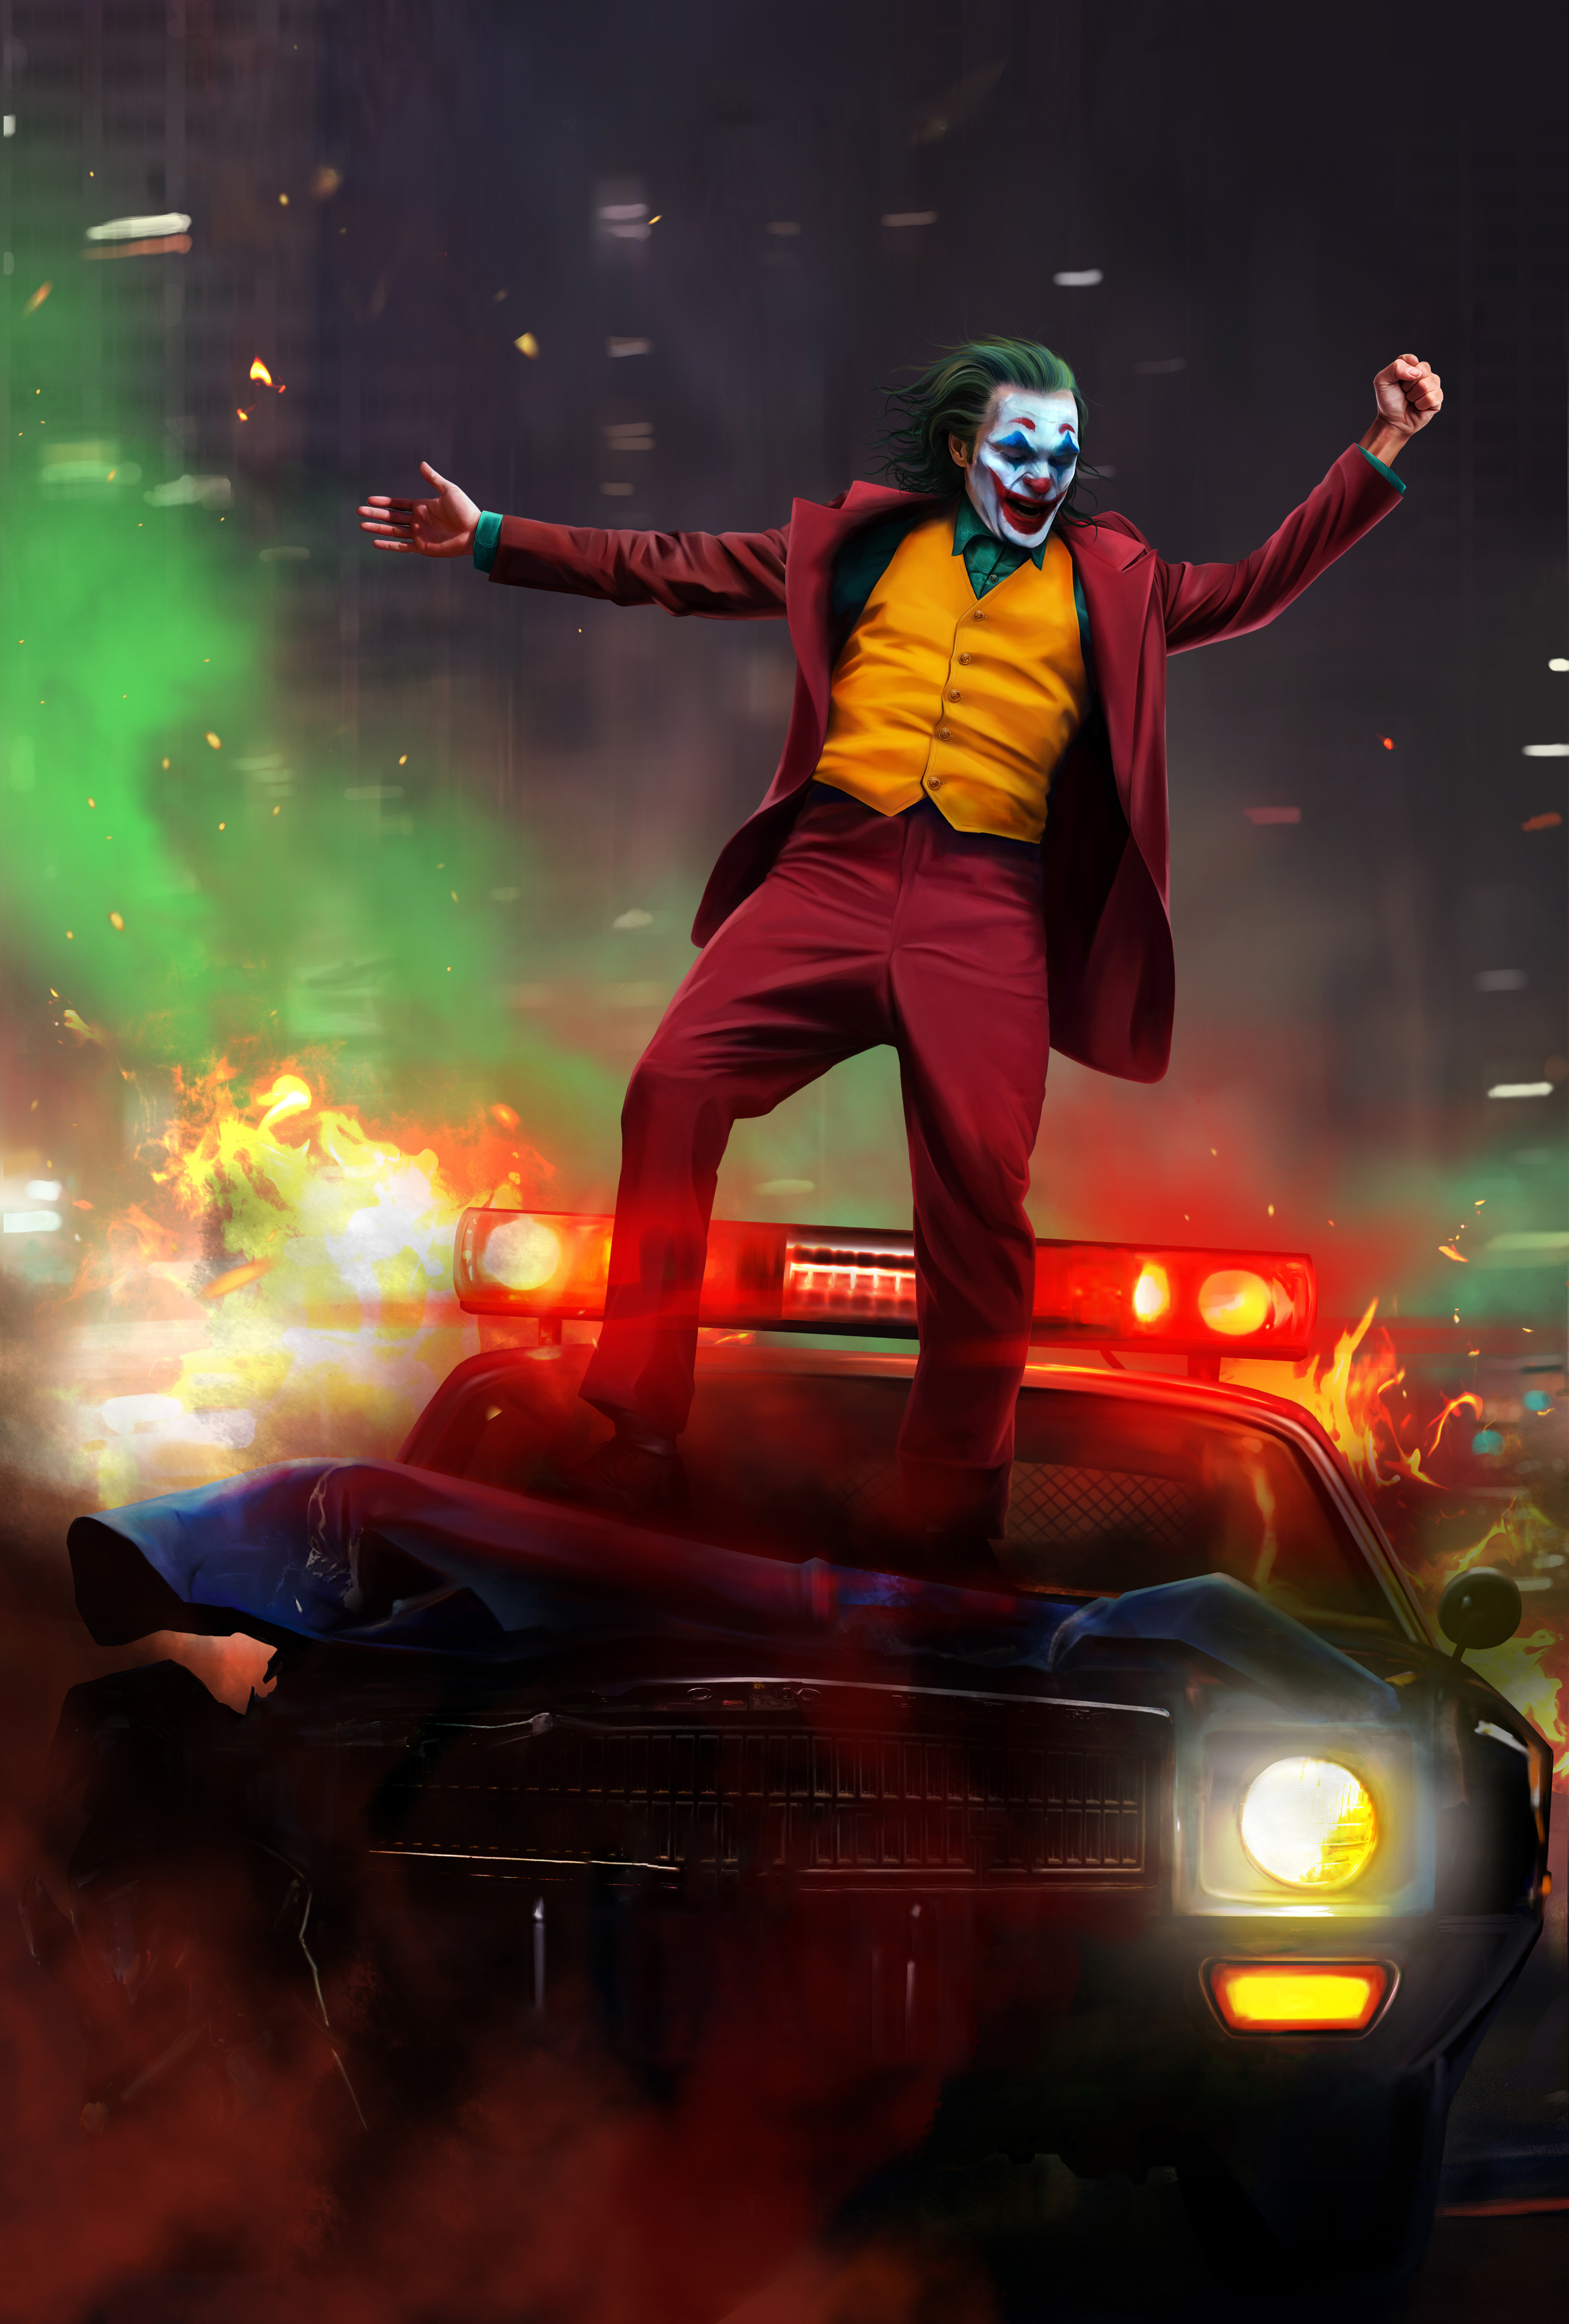 Joker 2019 Artwork Wallpaper, HD Artist 4K Wallpapers, Images, Photos and  Background - Wallpapers Den